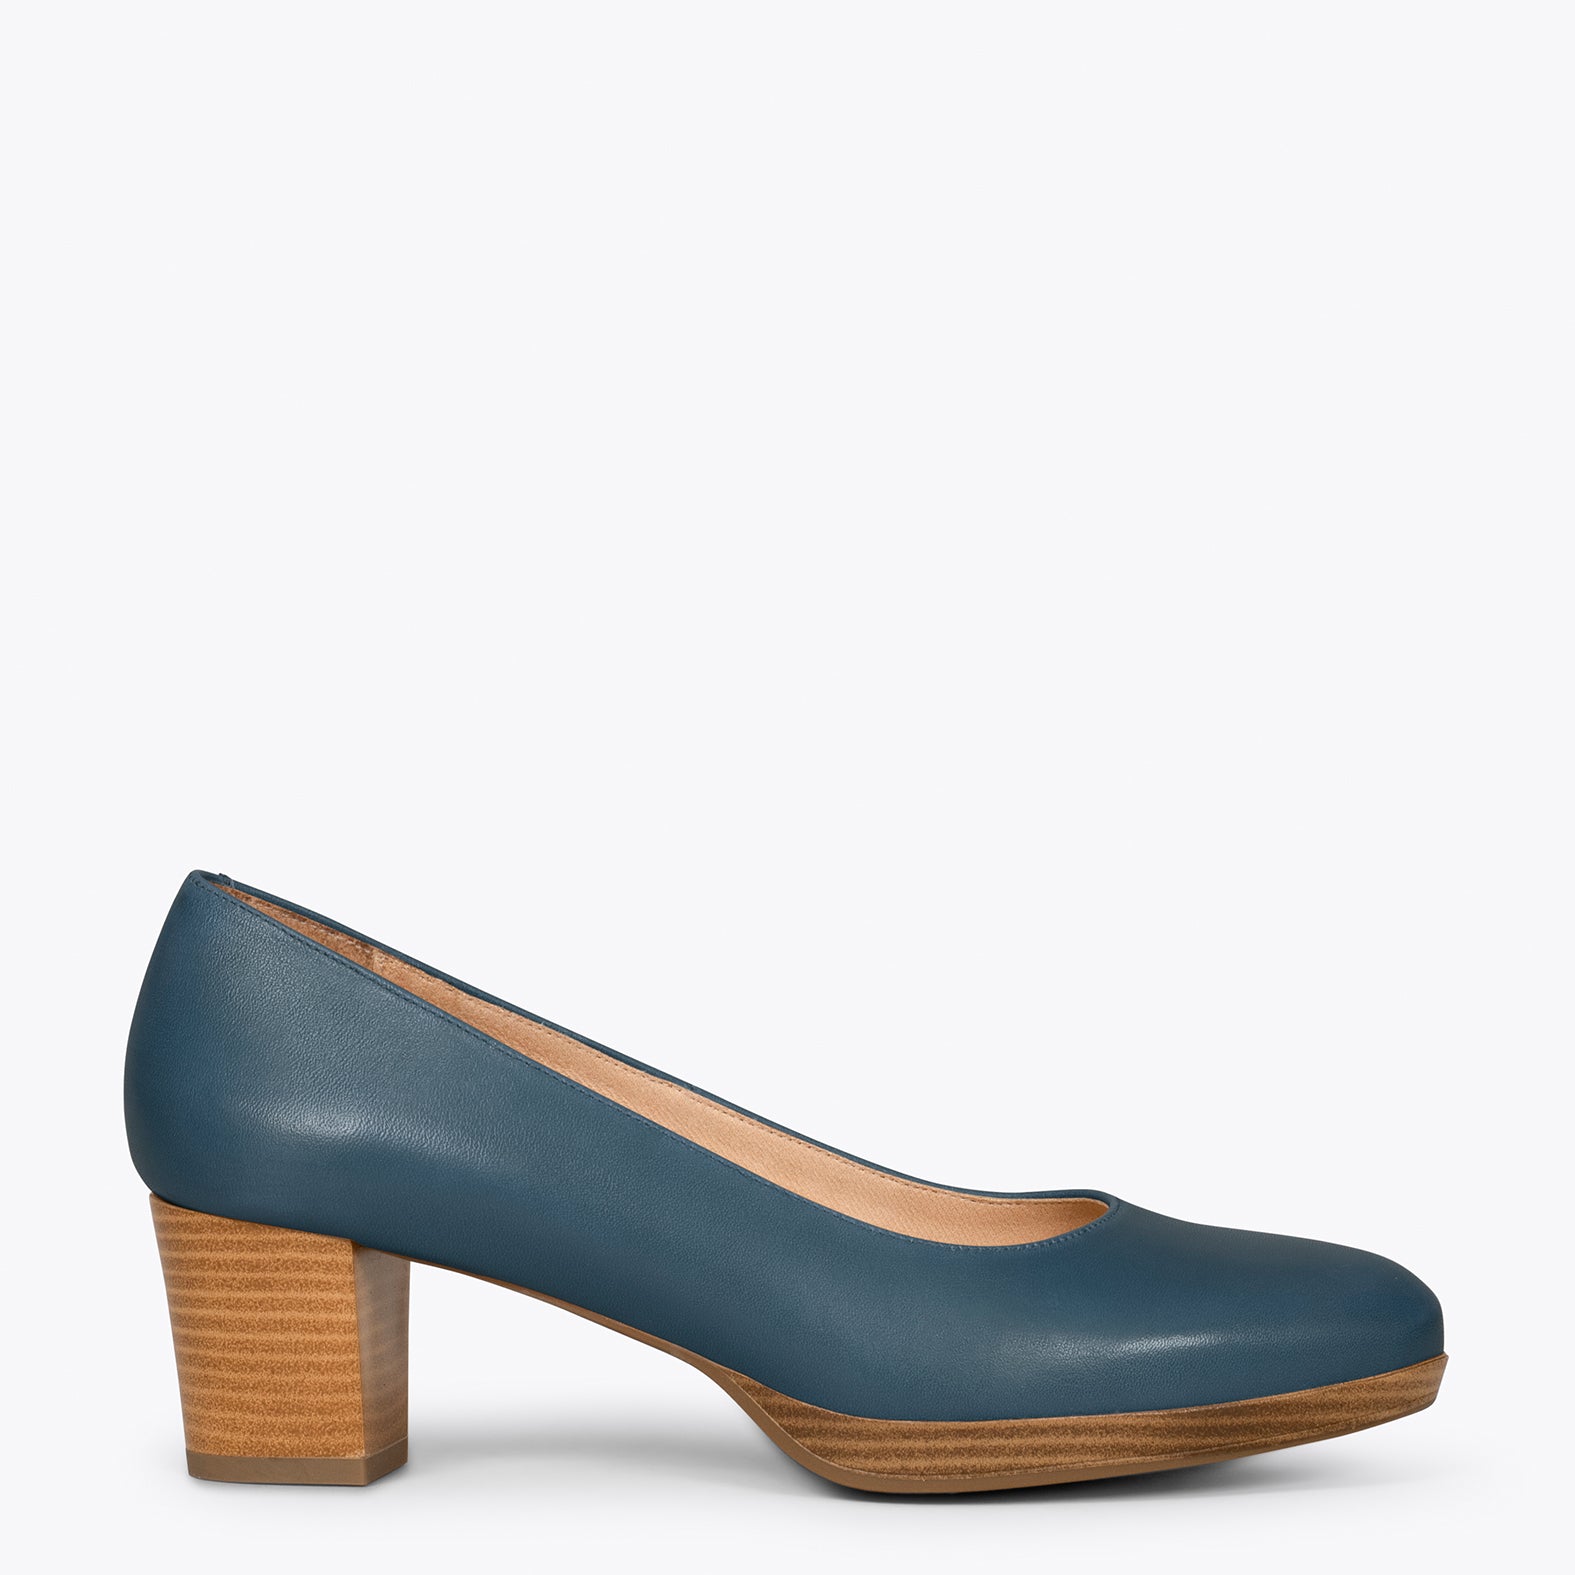 FLIGHT S – NAVY women's shoes with low heel and platform